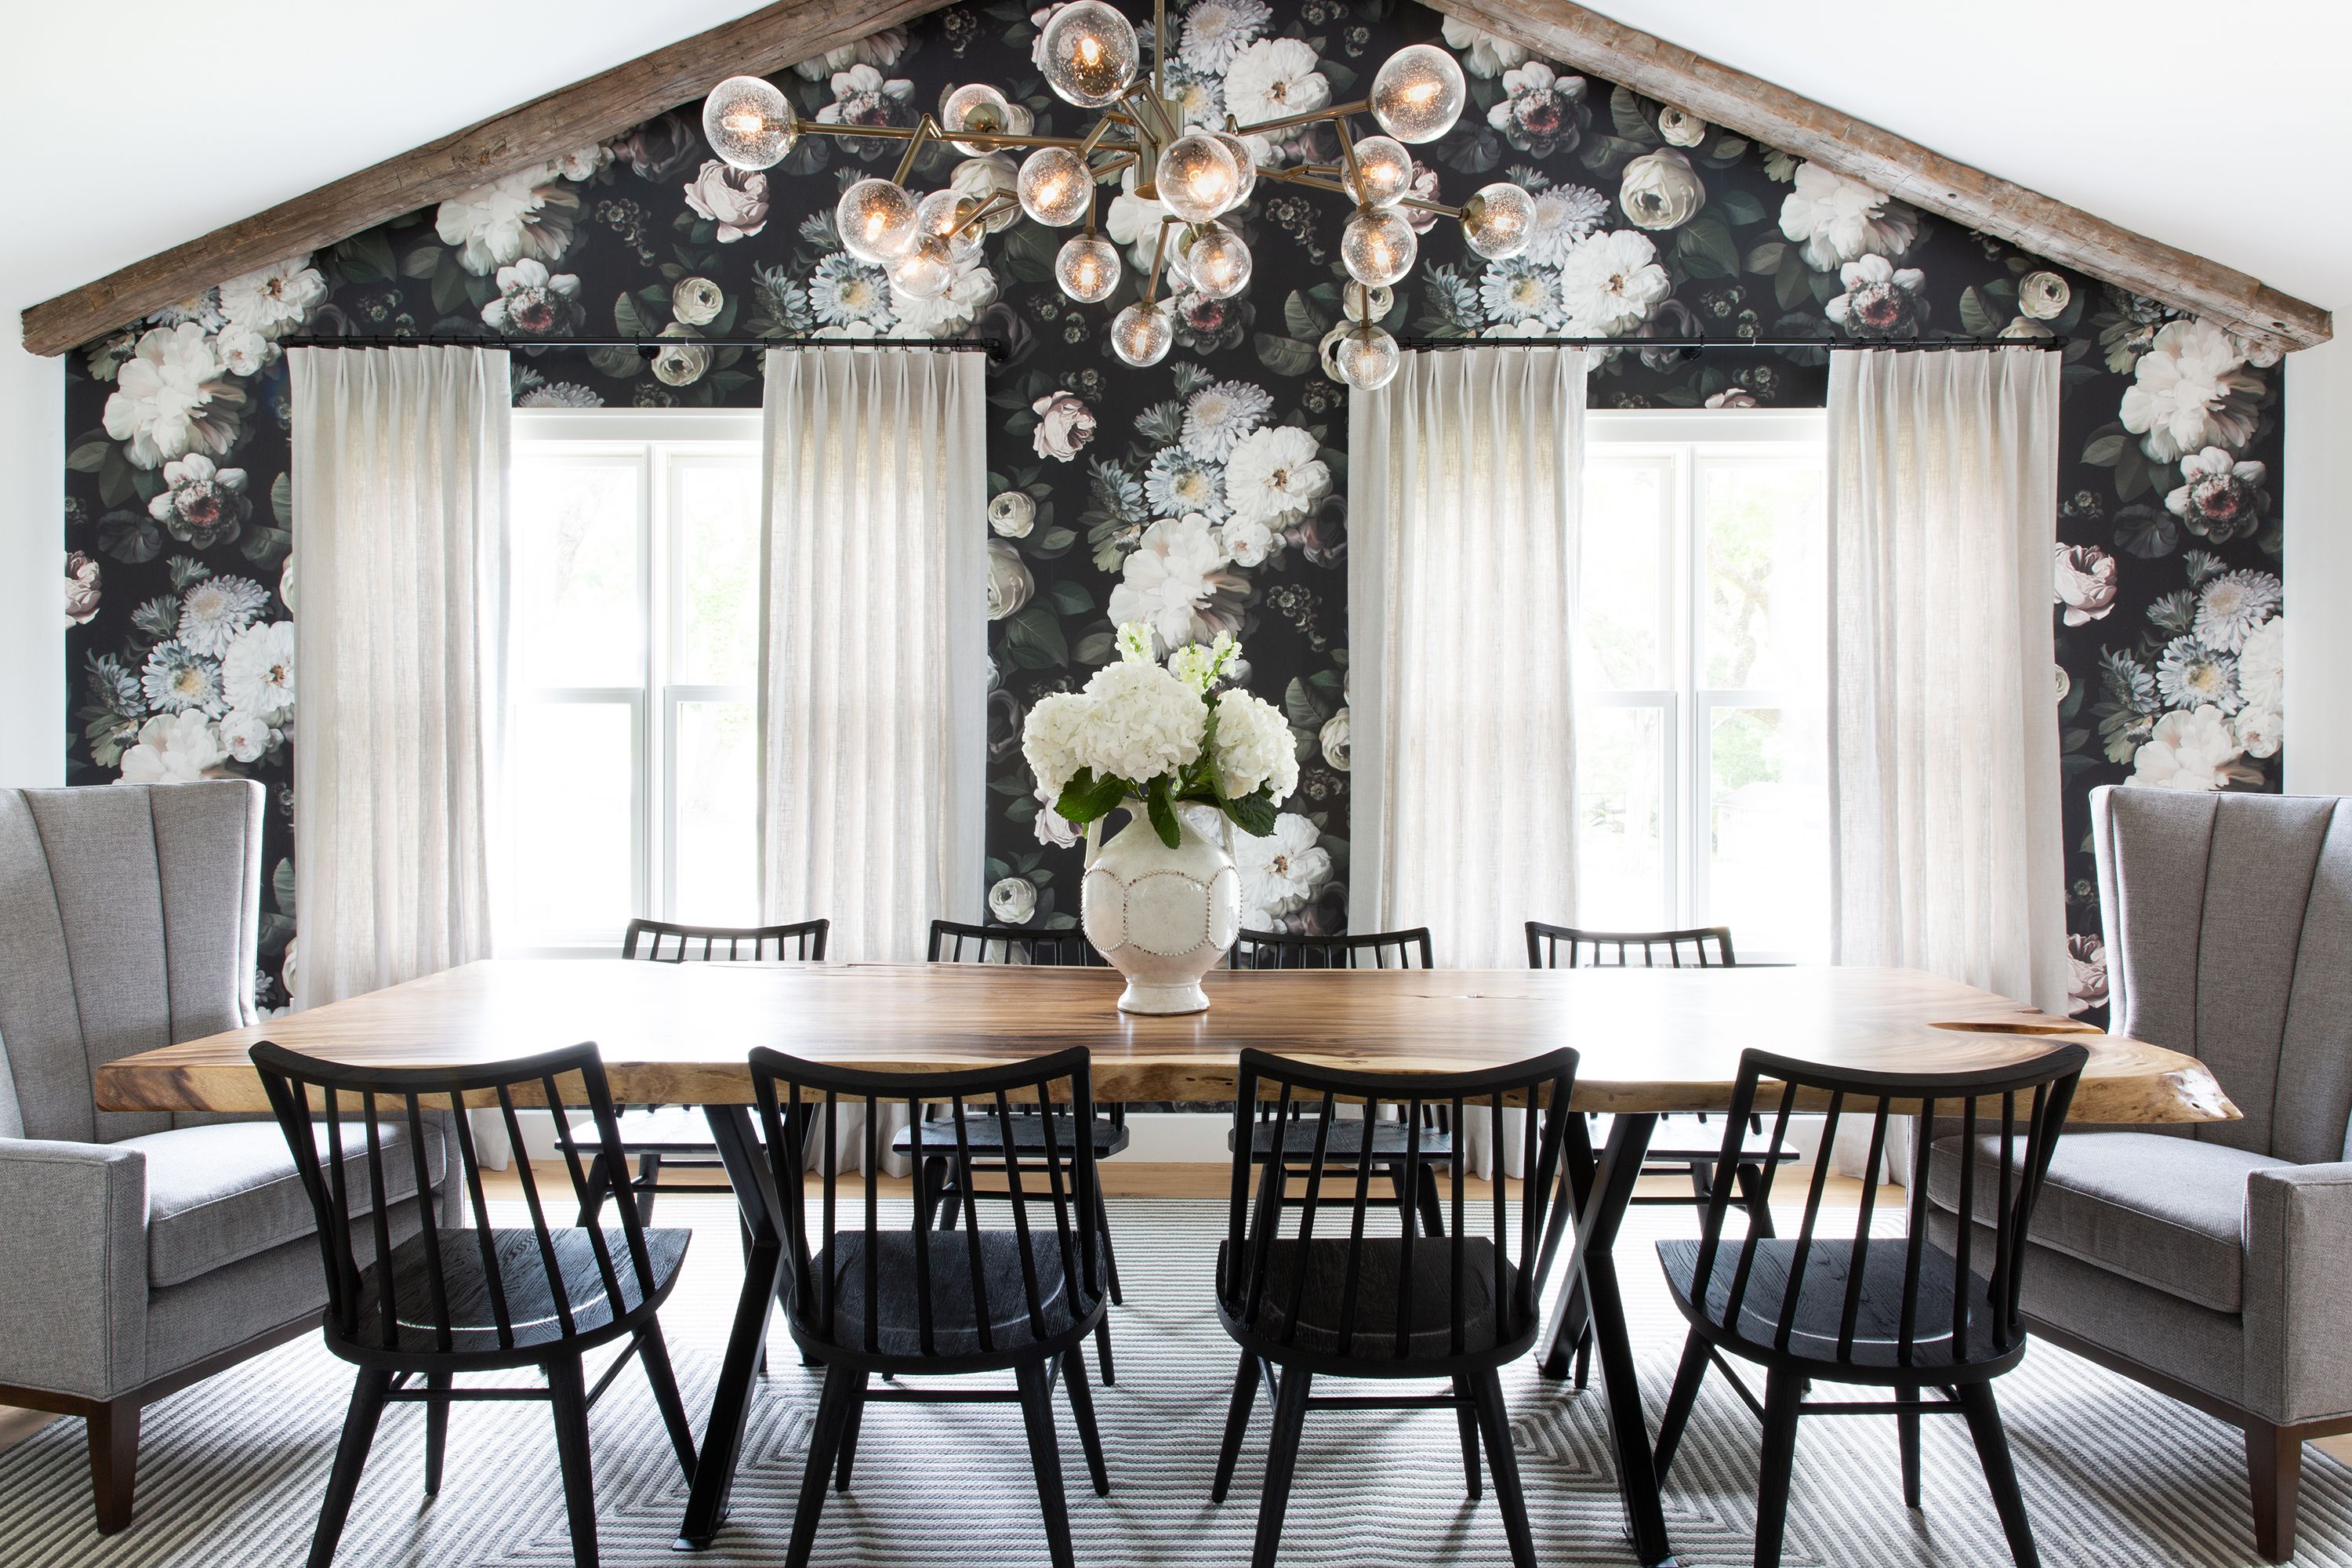 modern floral wallpaper patterns